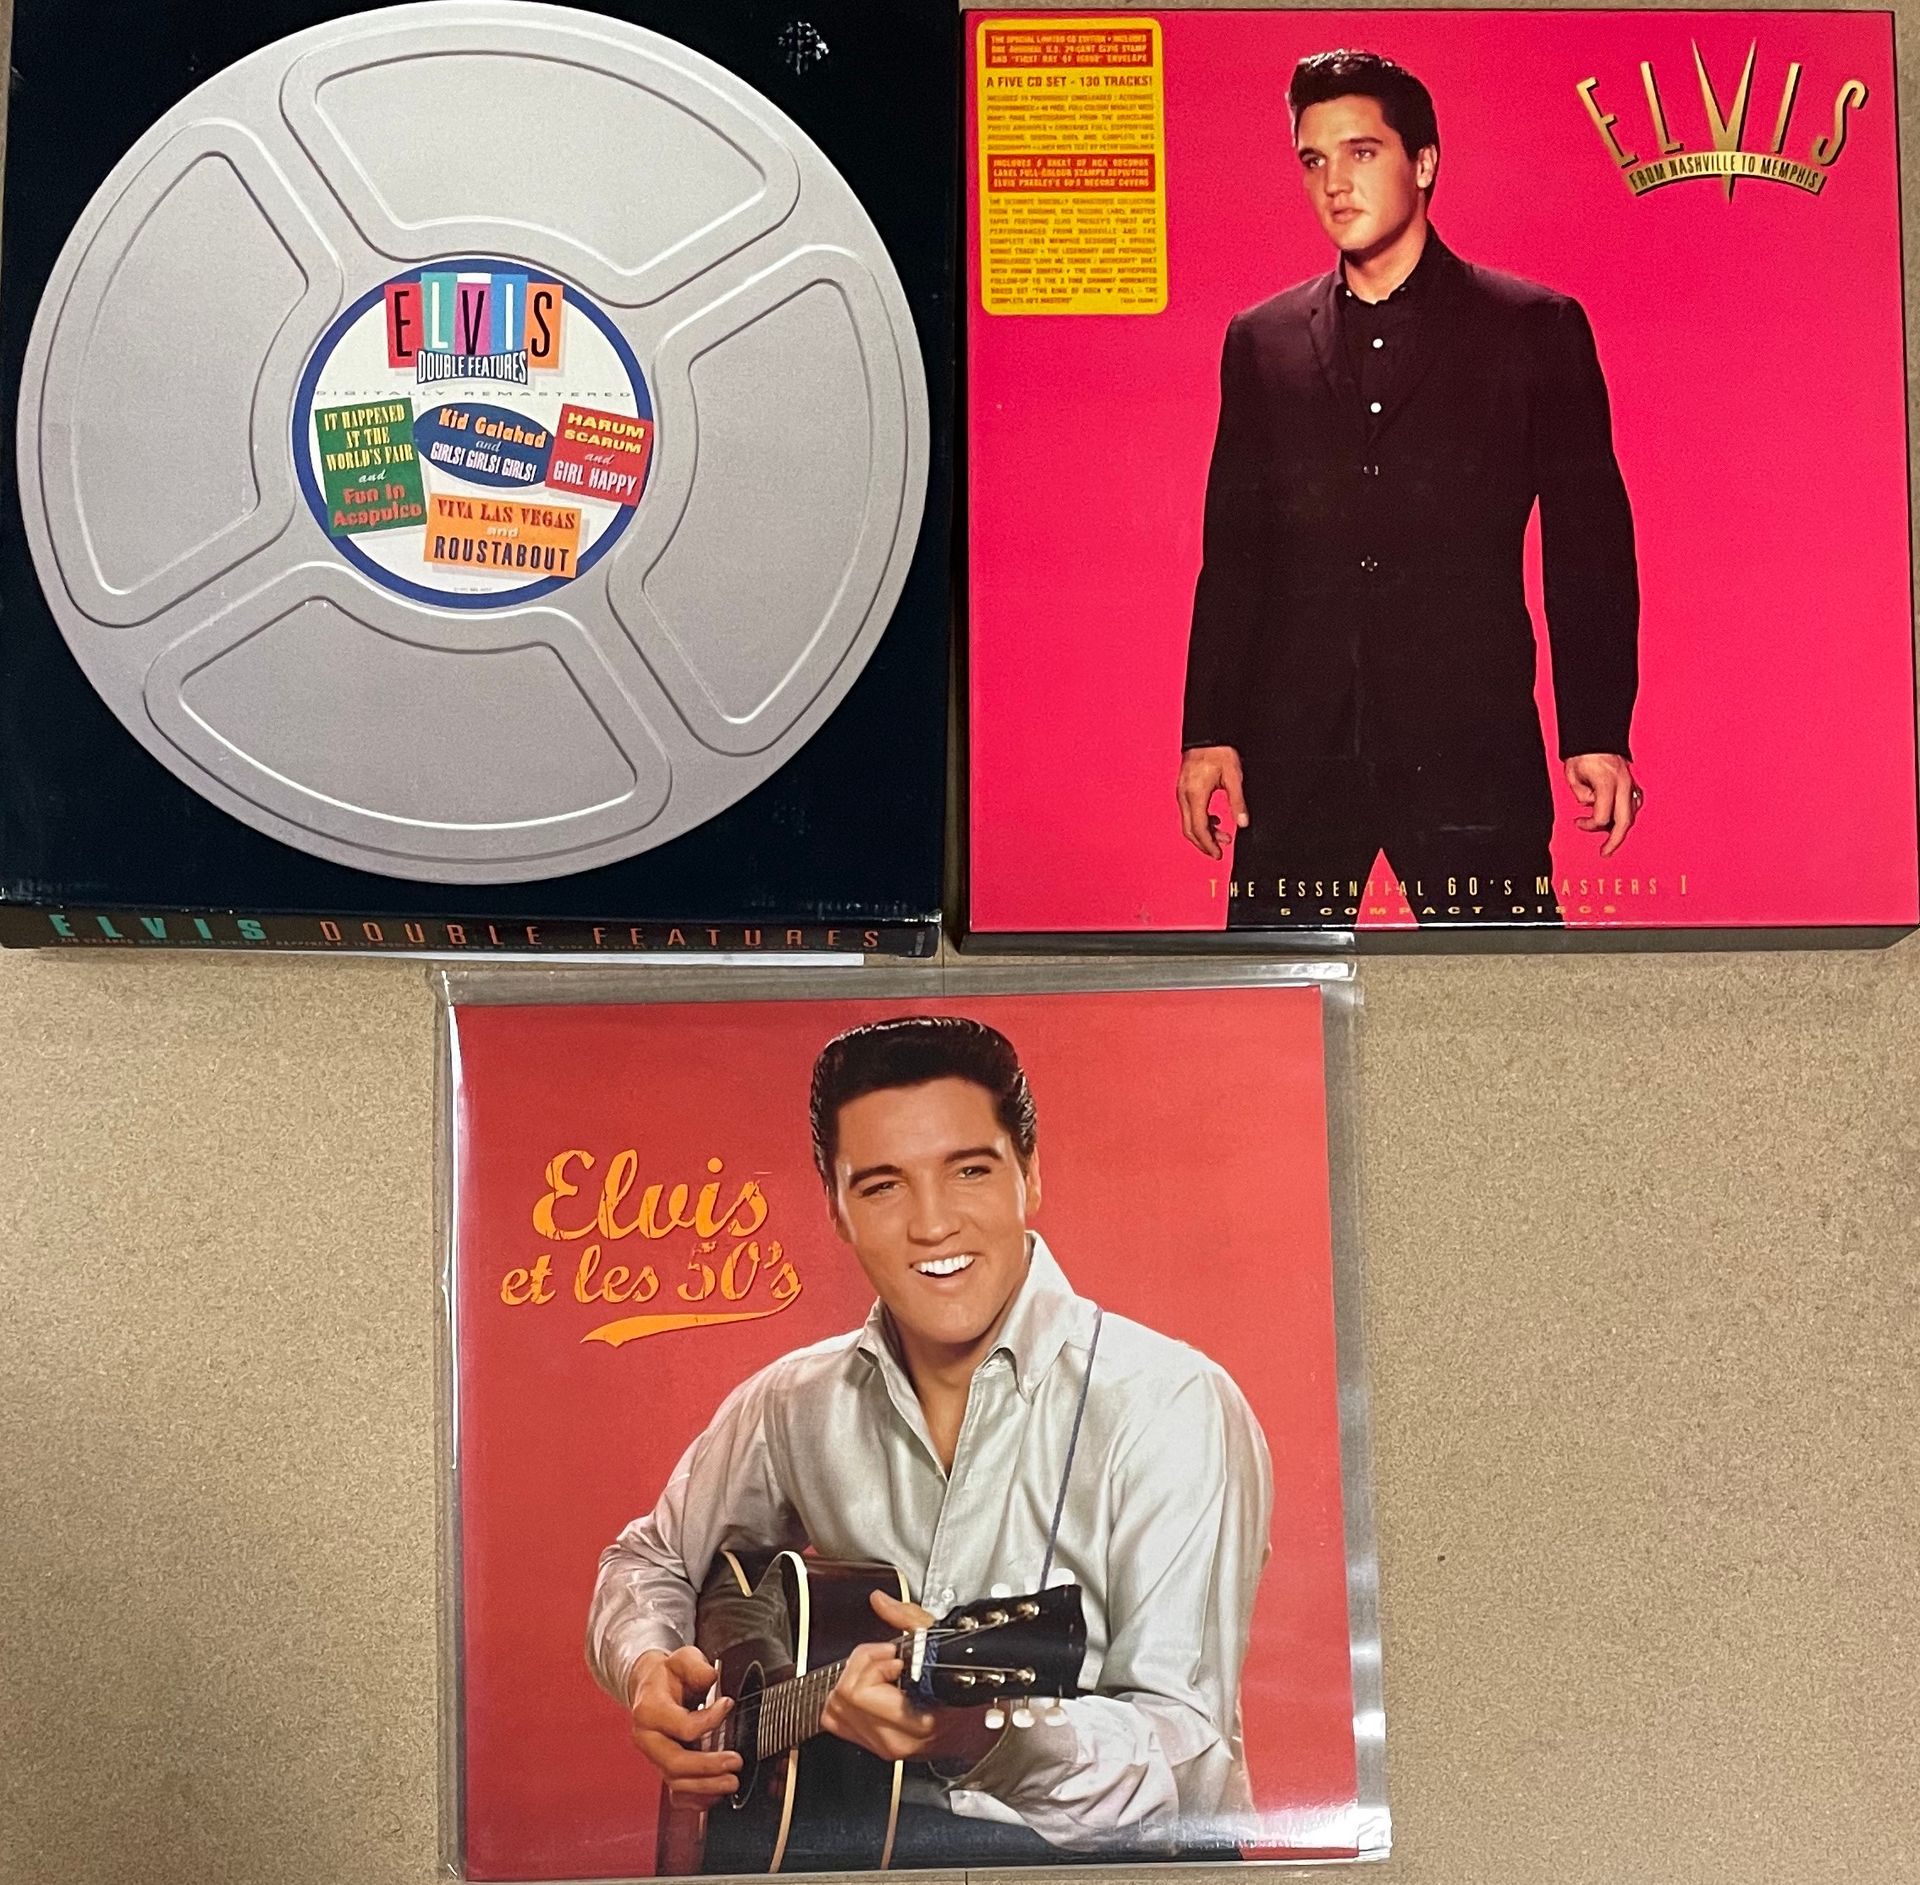 Null Tre CD completi - Elvis Presley

set completi

Da VG+ a NM; da VG+ a NM